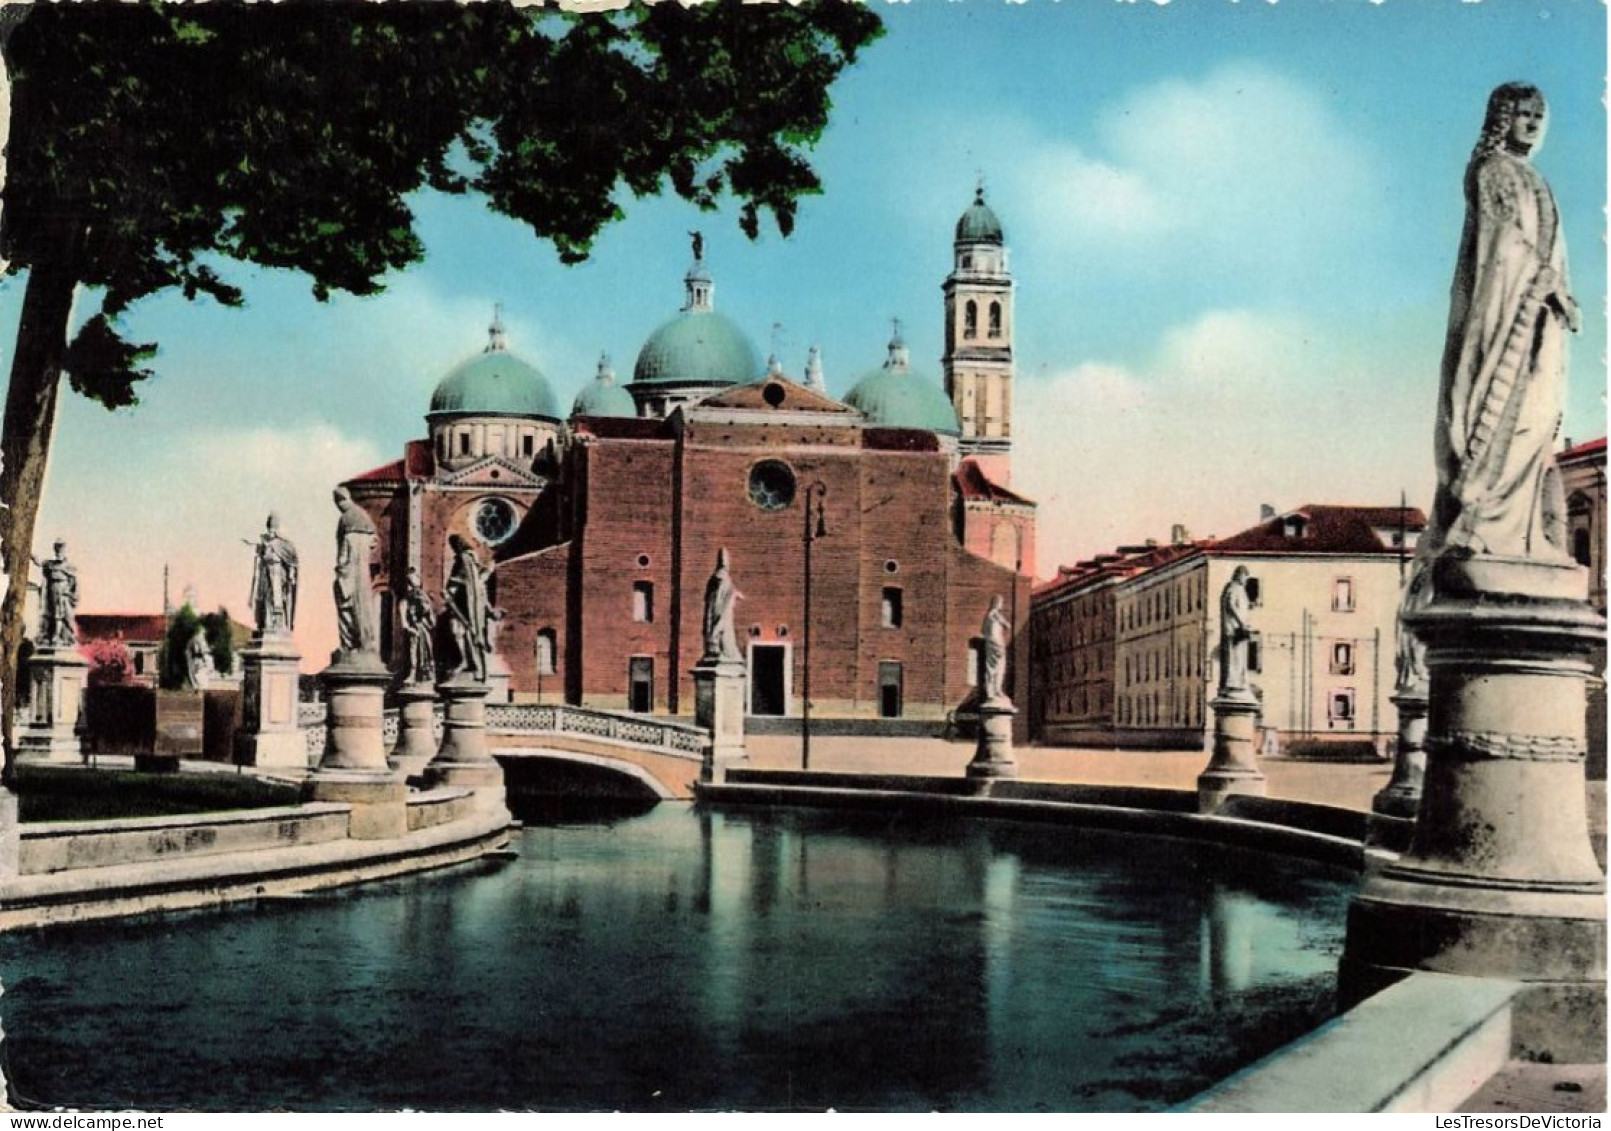 ITALIE - Padova - Prato Della Valle Et La Basilique De Saint Giustina - Colorisé - Carte Postale - Padova (Padua)